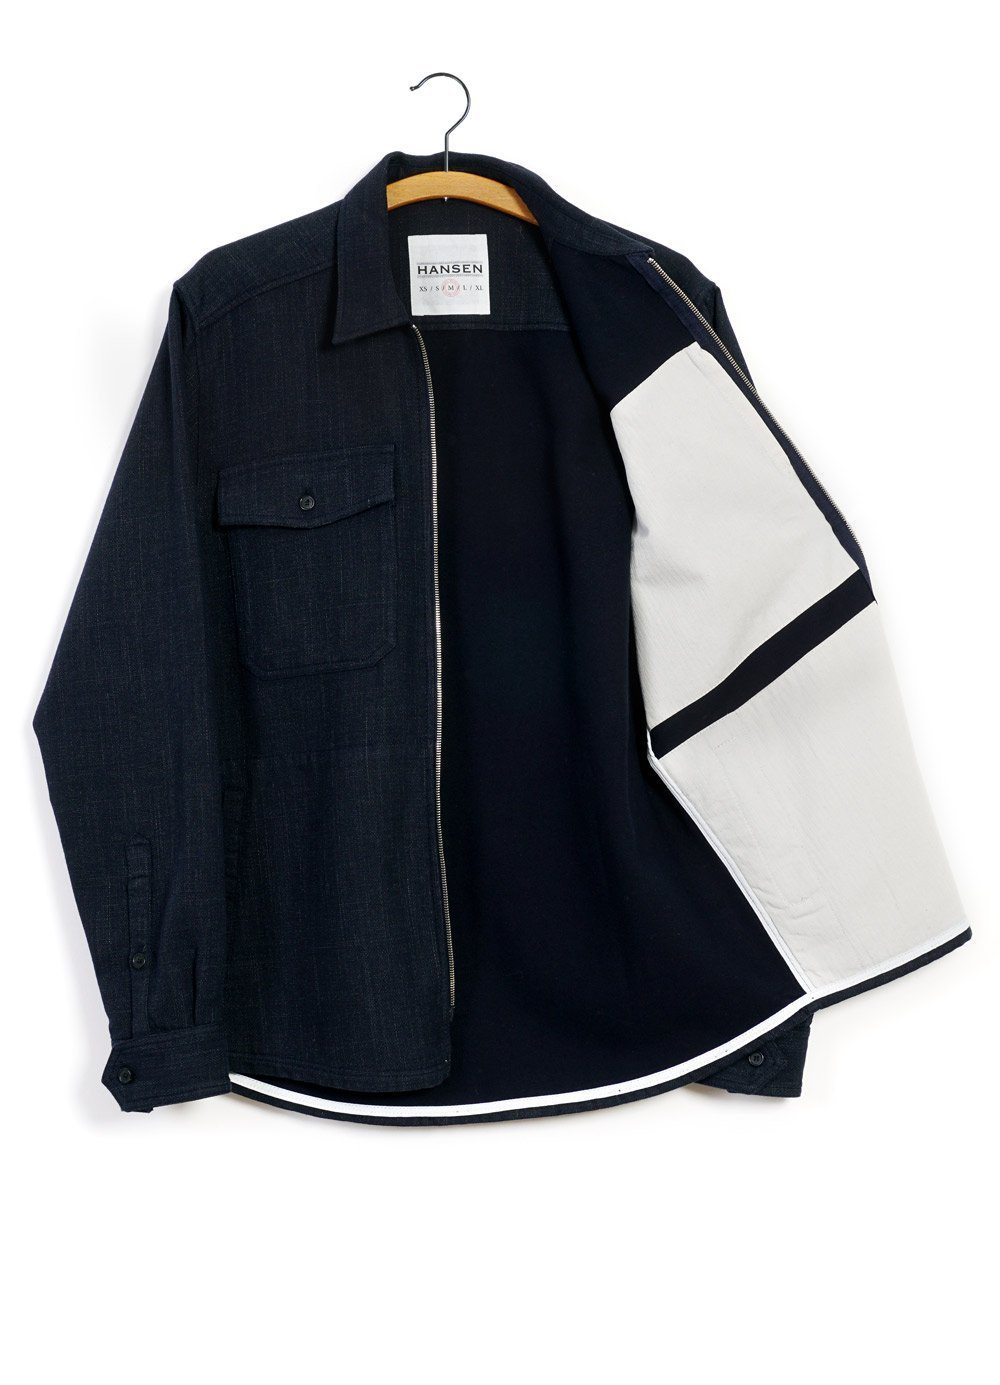 HANSEN Garments - SIGVE | Zipper Front Over Shirt | Navy Melange - HANSEN Garments